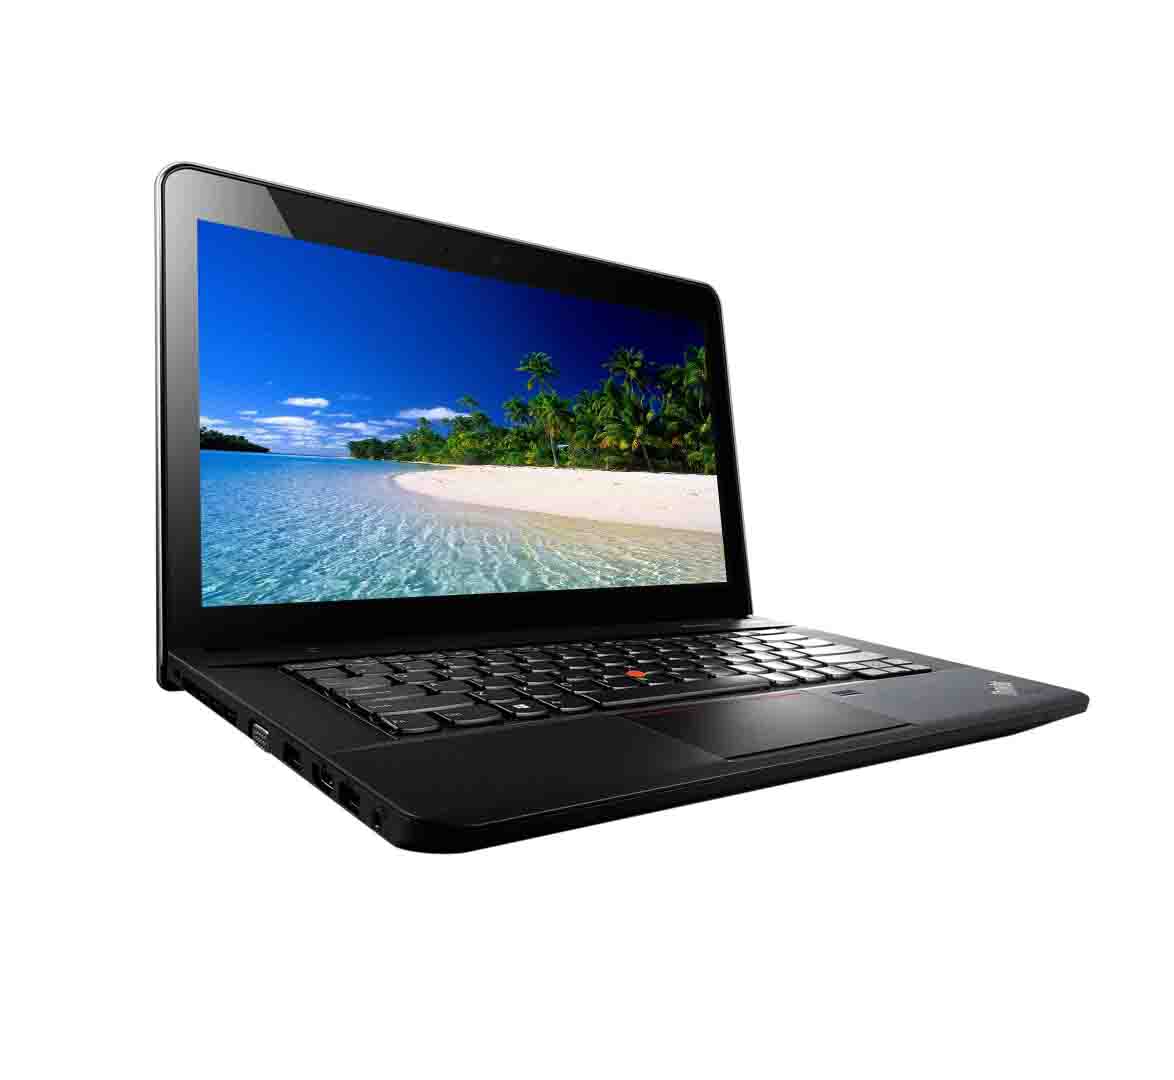 Lenovo ThinkPad Edge E540 Business Laptop, Intel Core i3-4th Gen. CPU, 8GB RAM, 500GB HDD, 14.1 inch Display, Windows 10 Pro, Refurbished Laptop